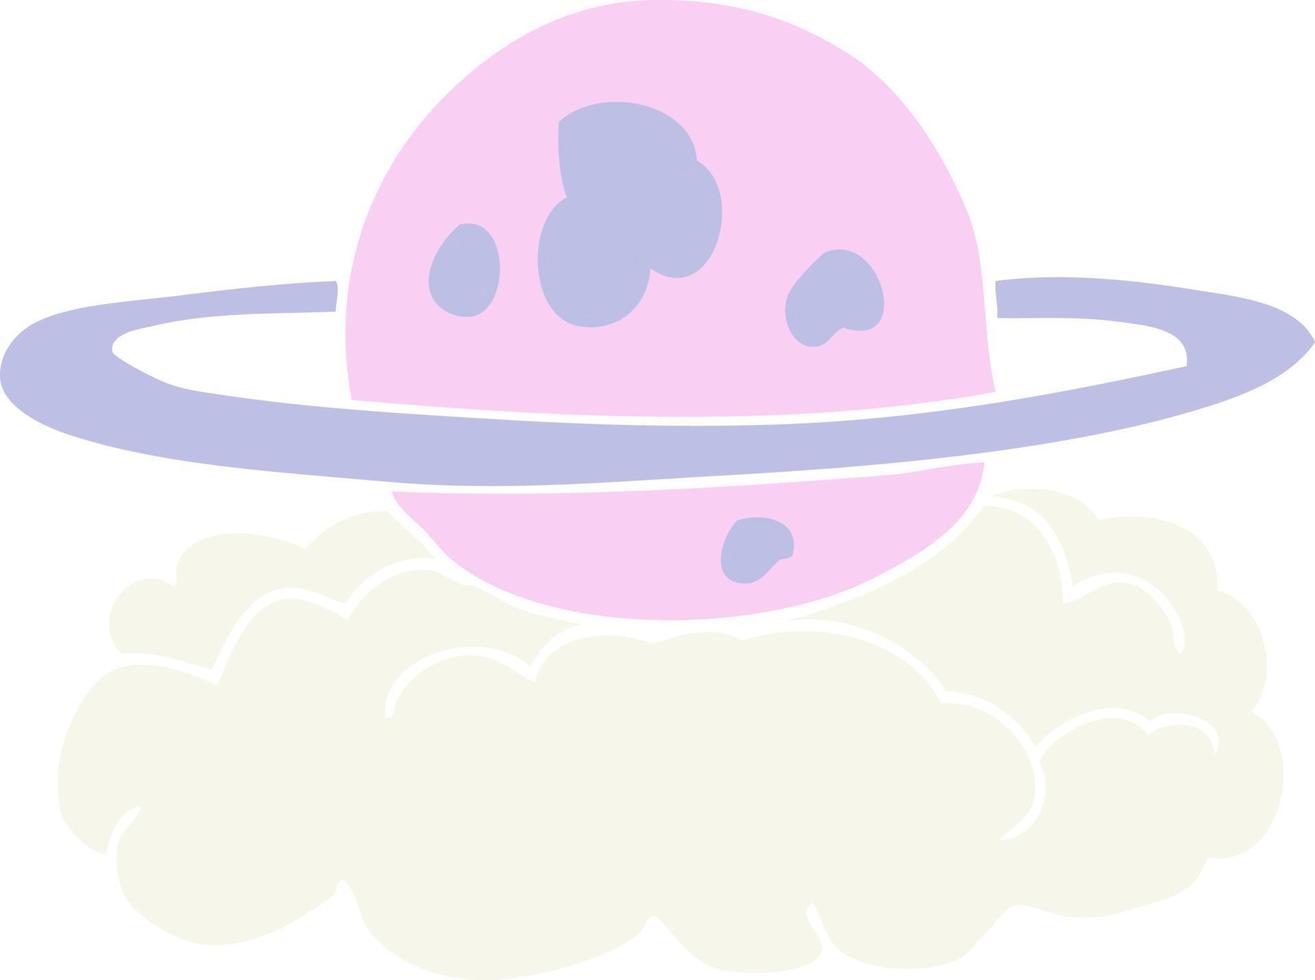 flat color illustration of a cartoon alien planet vector